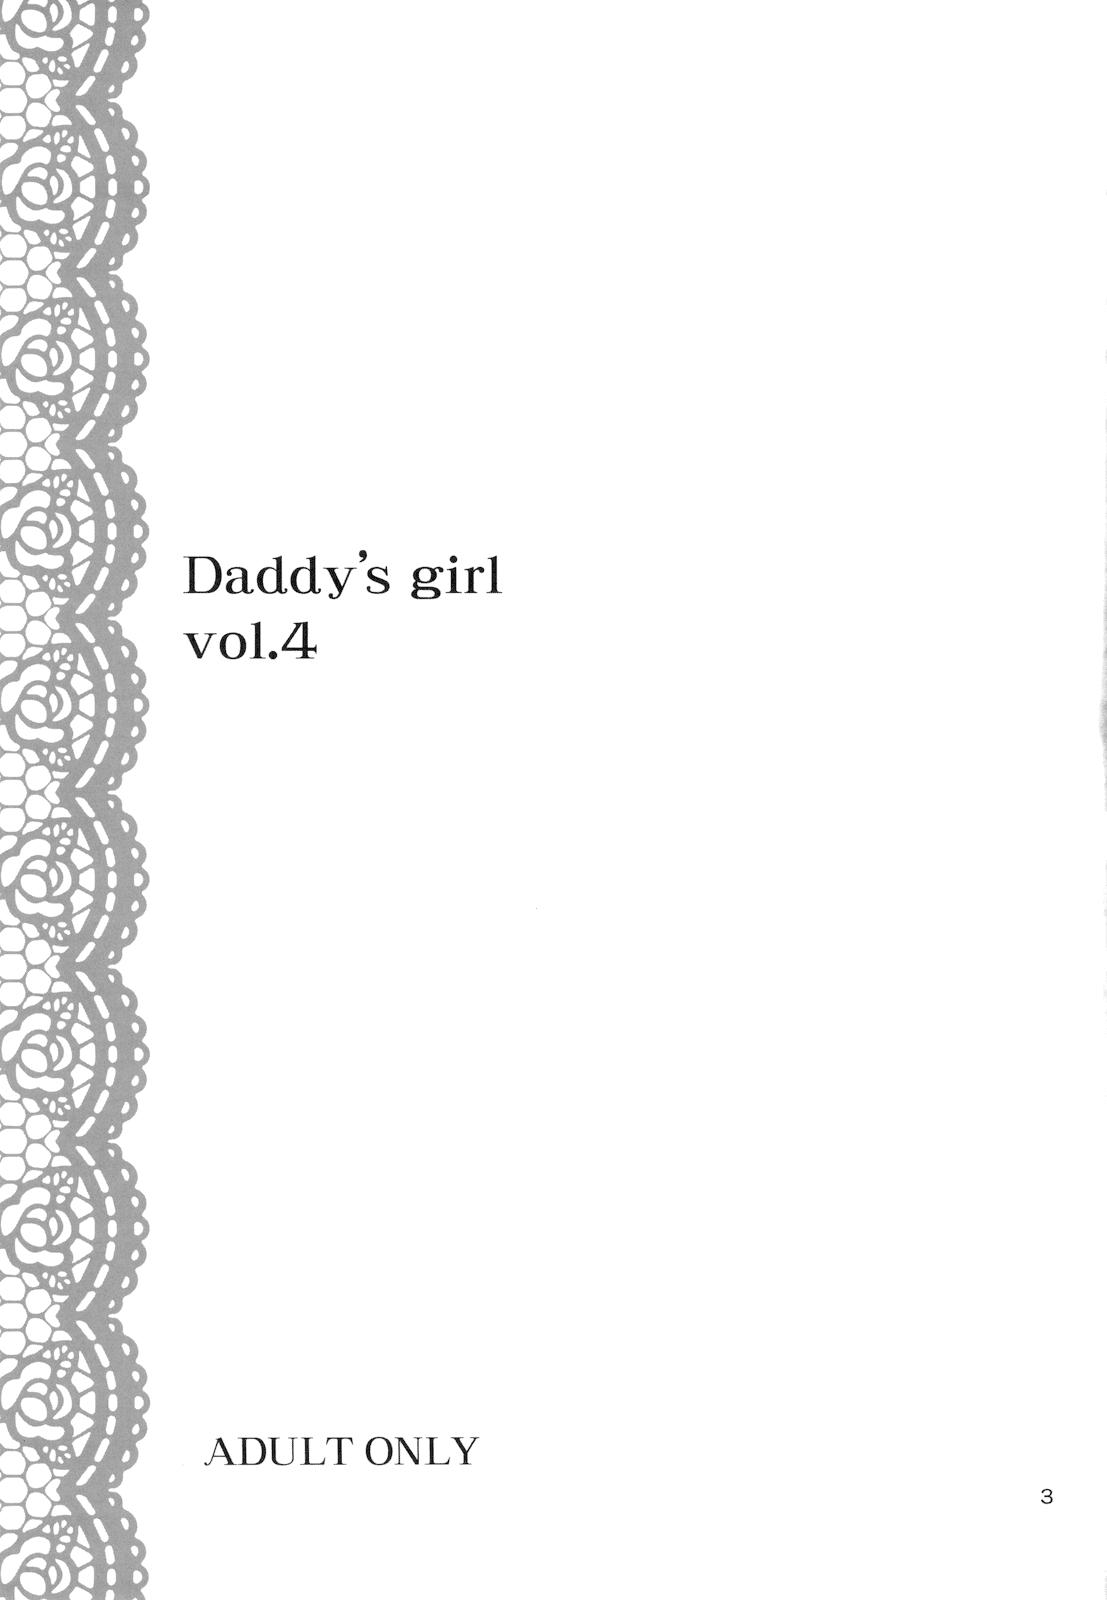 DG - Daddy's Girl Vol. 4 2